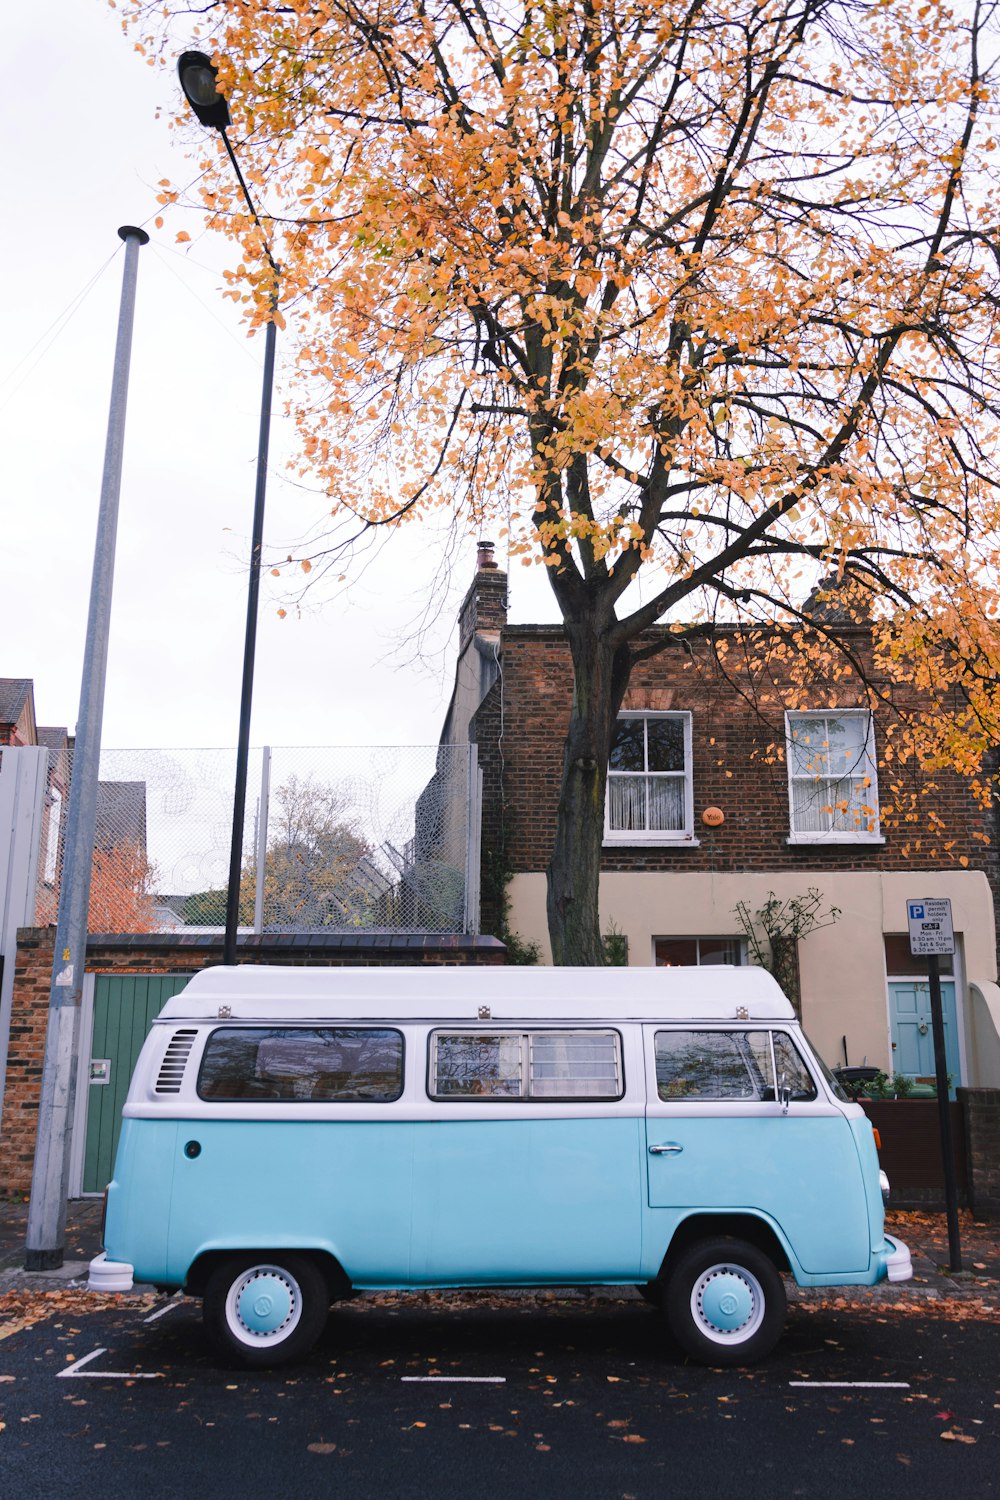 Whiet and blue van photo – Free London Image on Unsplash